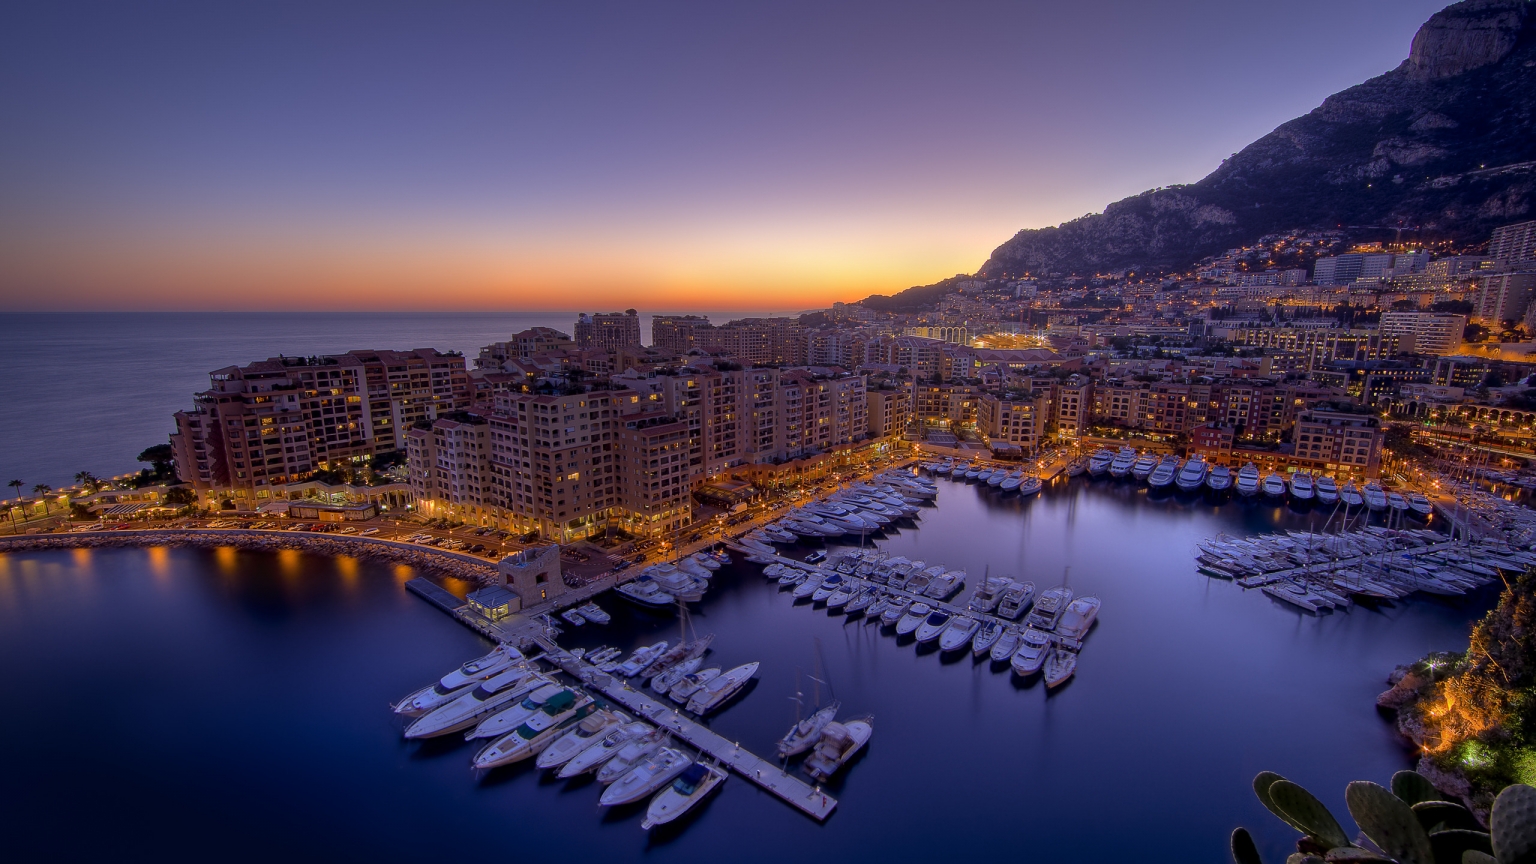 Monaco for 1536 x 864 HDTV resolution